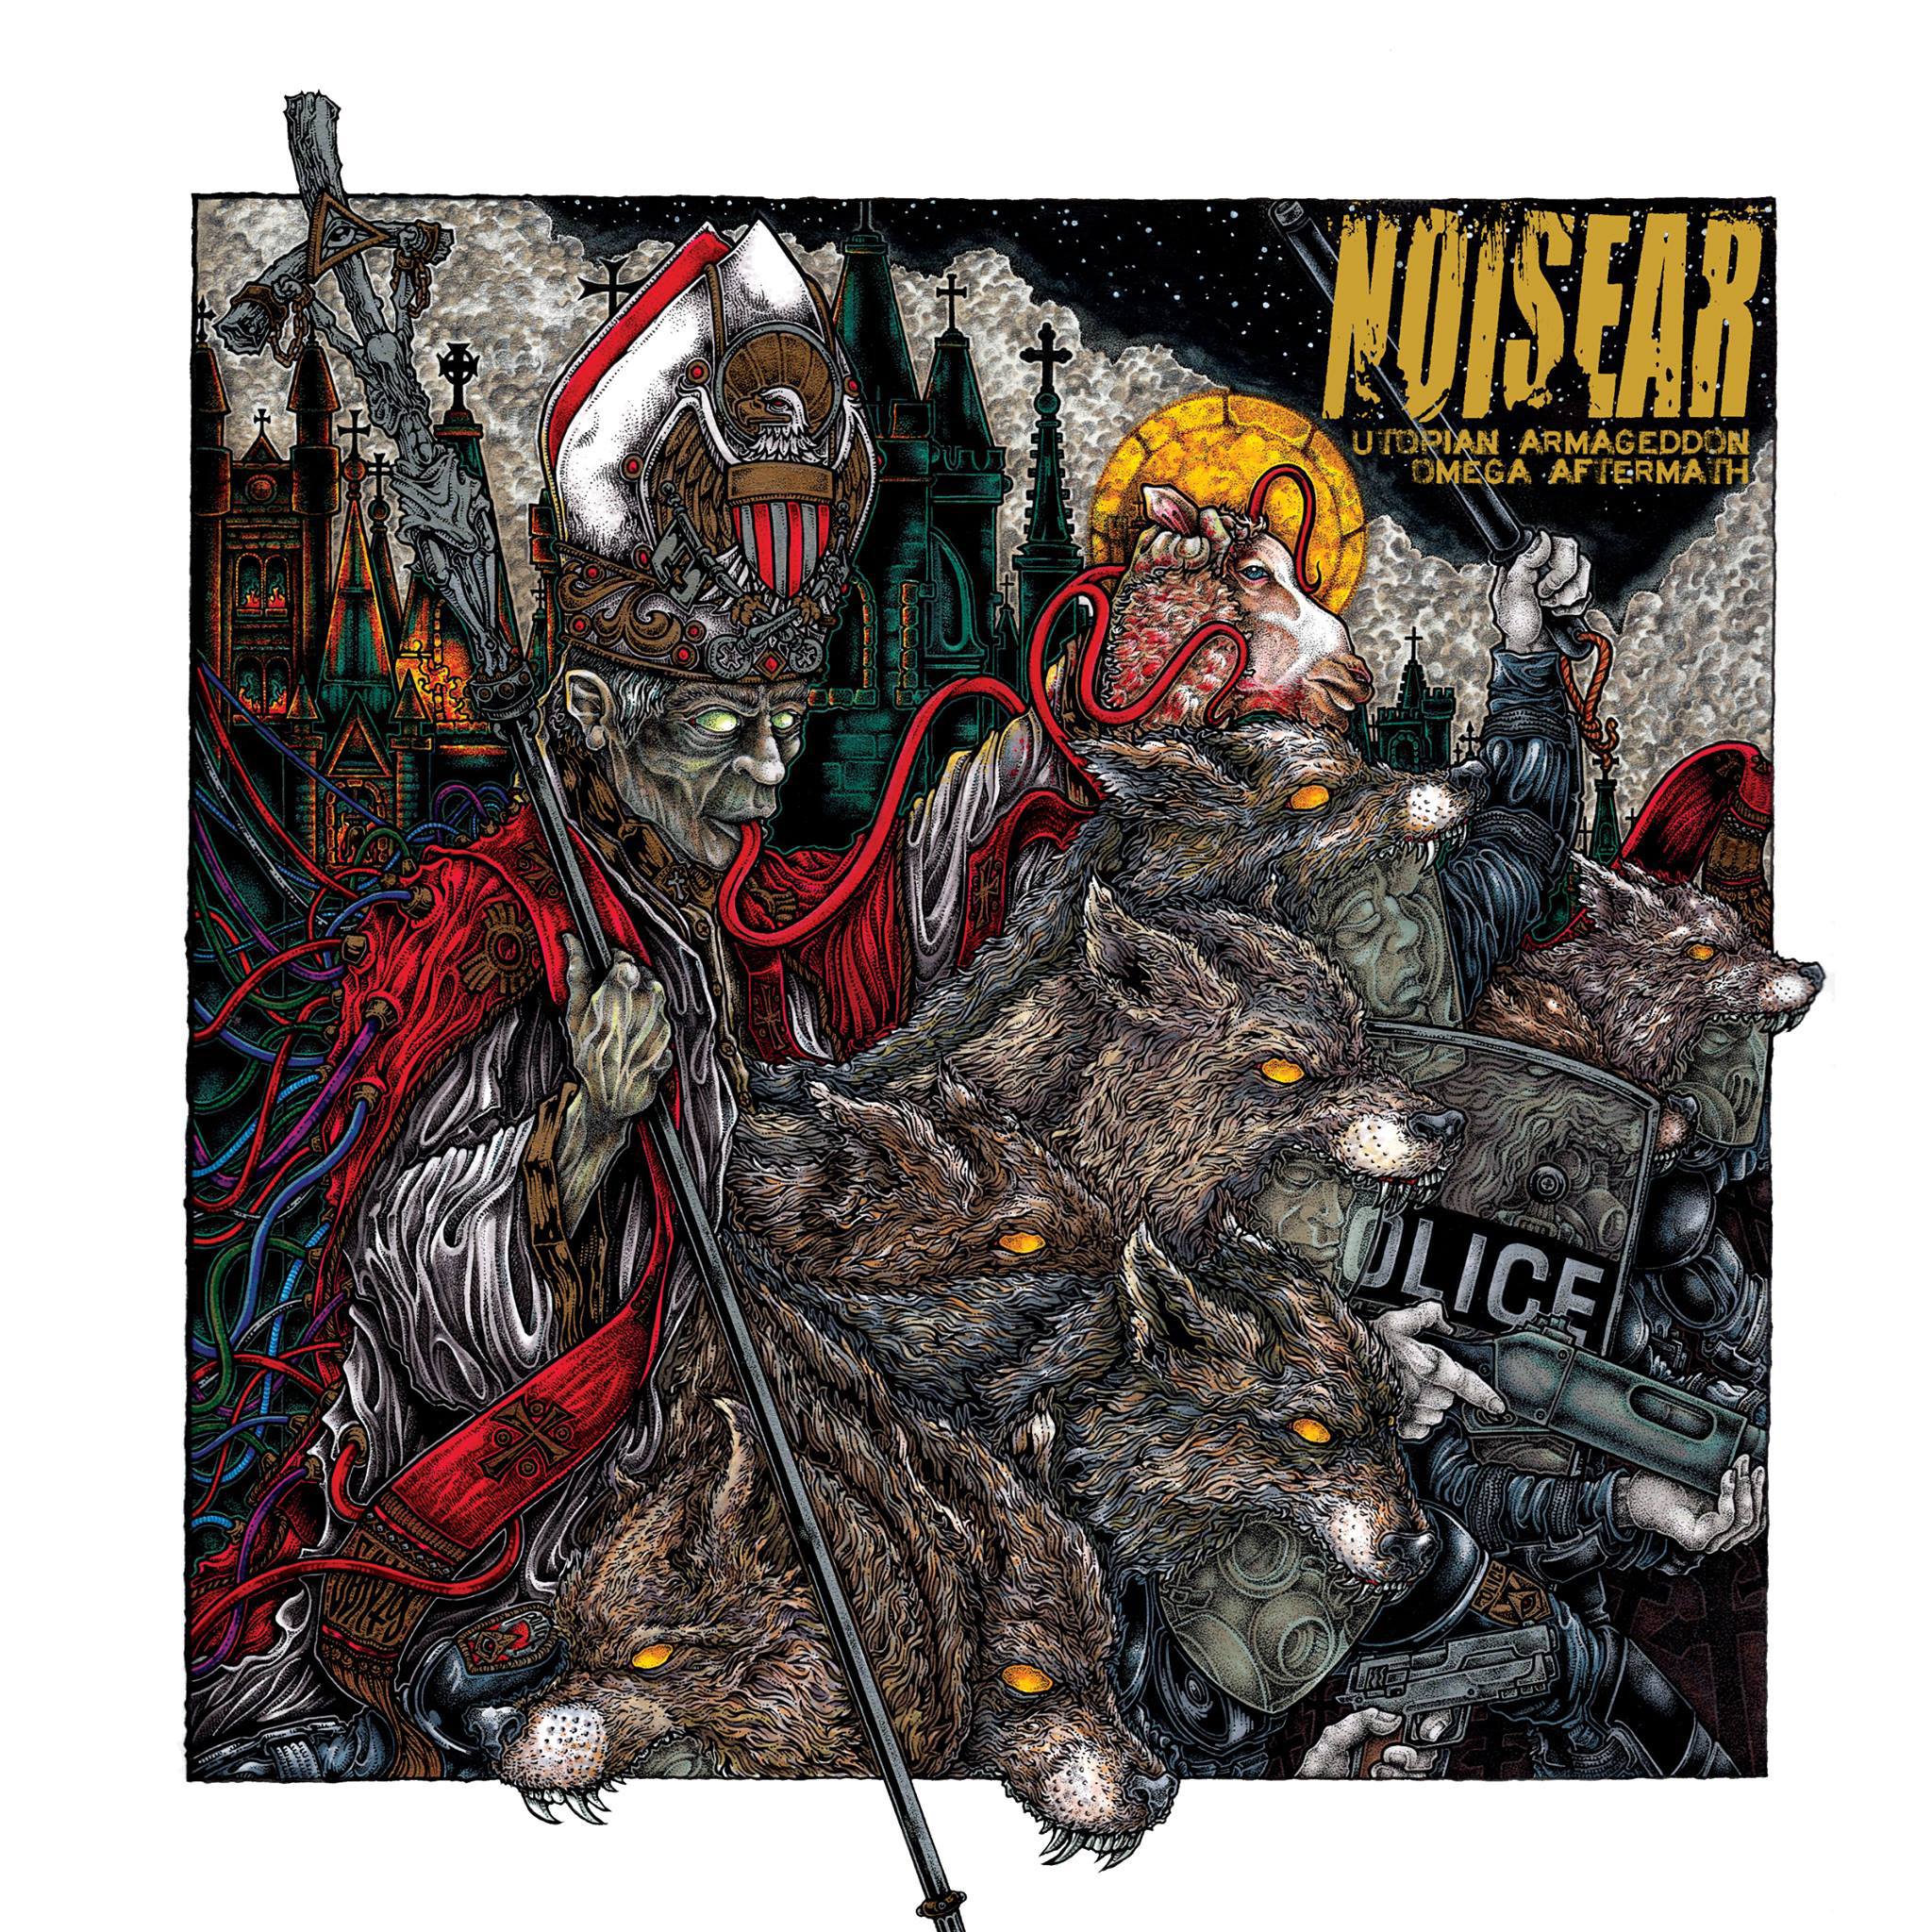 NOISEAR - "Utopian Armageddon/Omega Aftermath" - LP/CD cover by John Santos